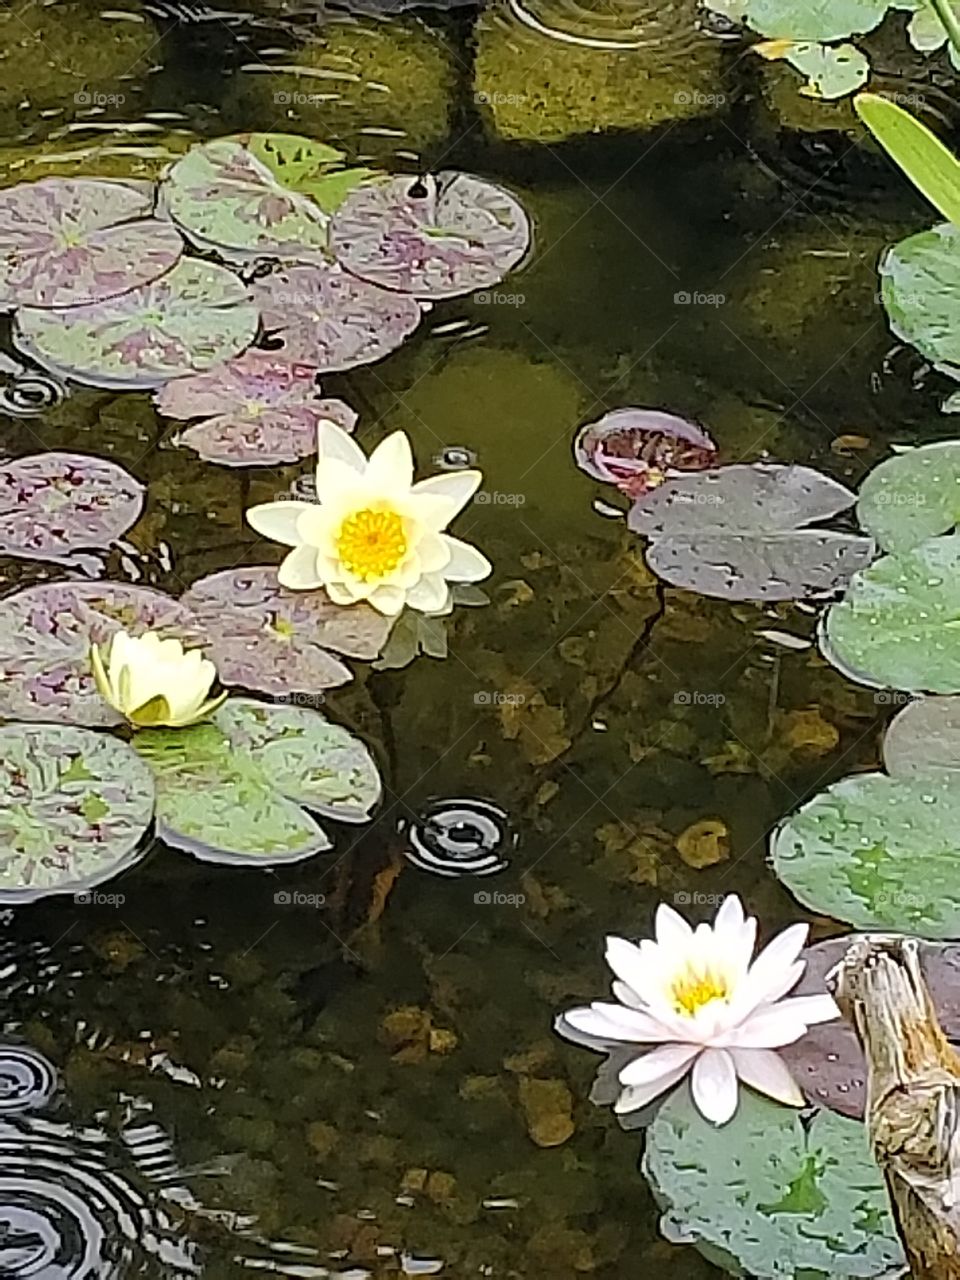 flower pond